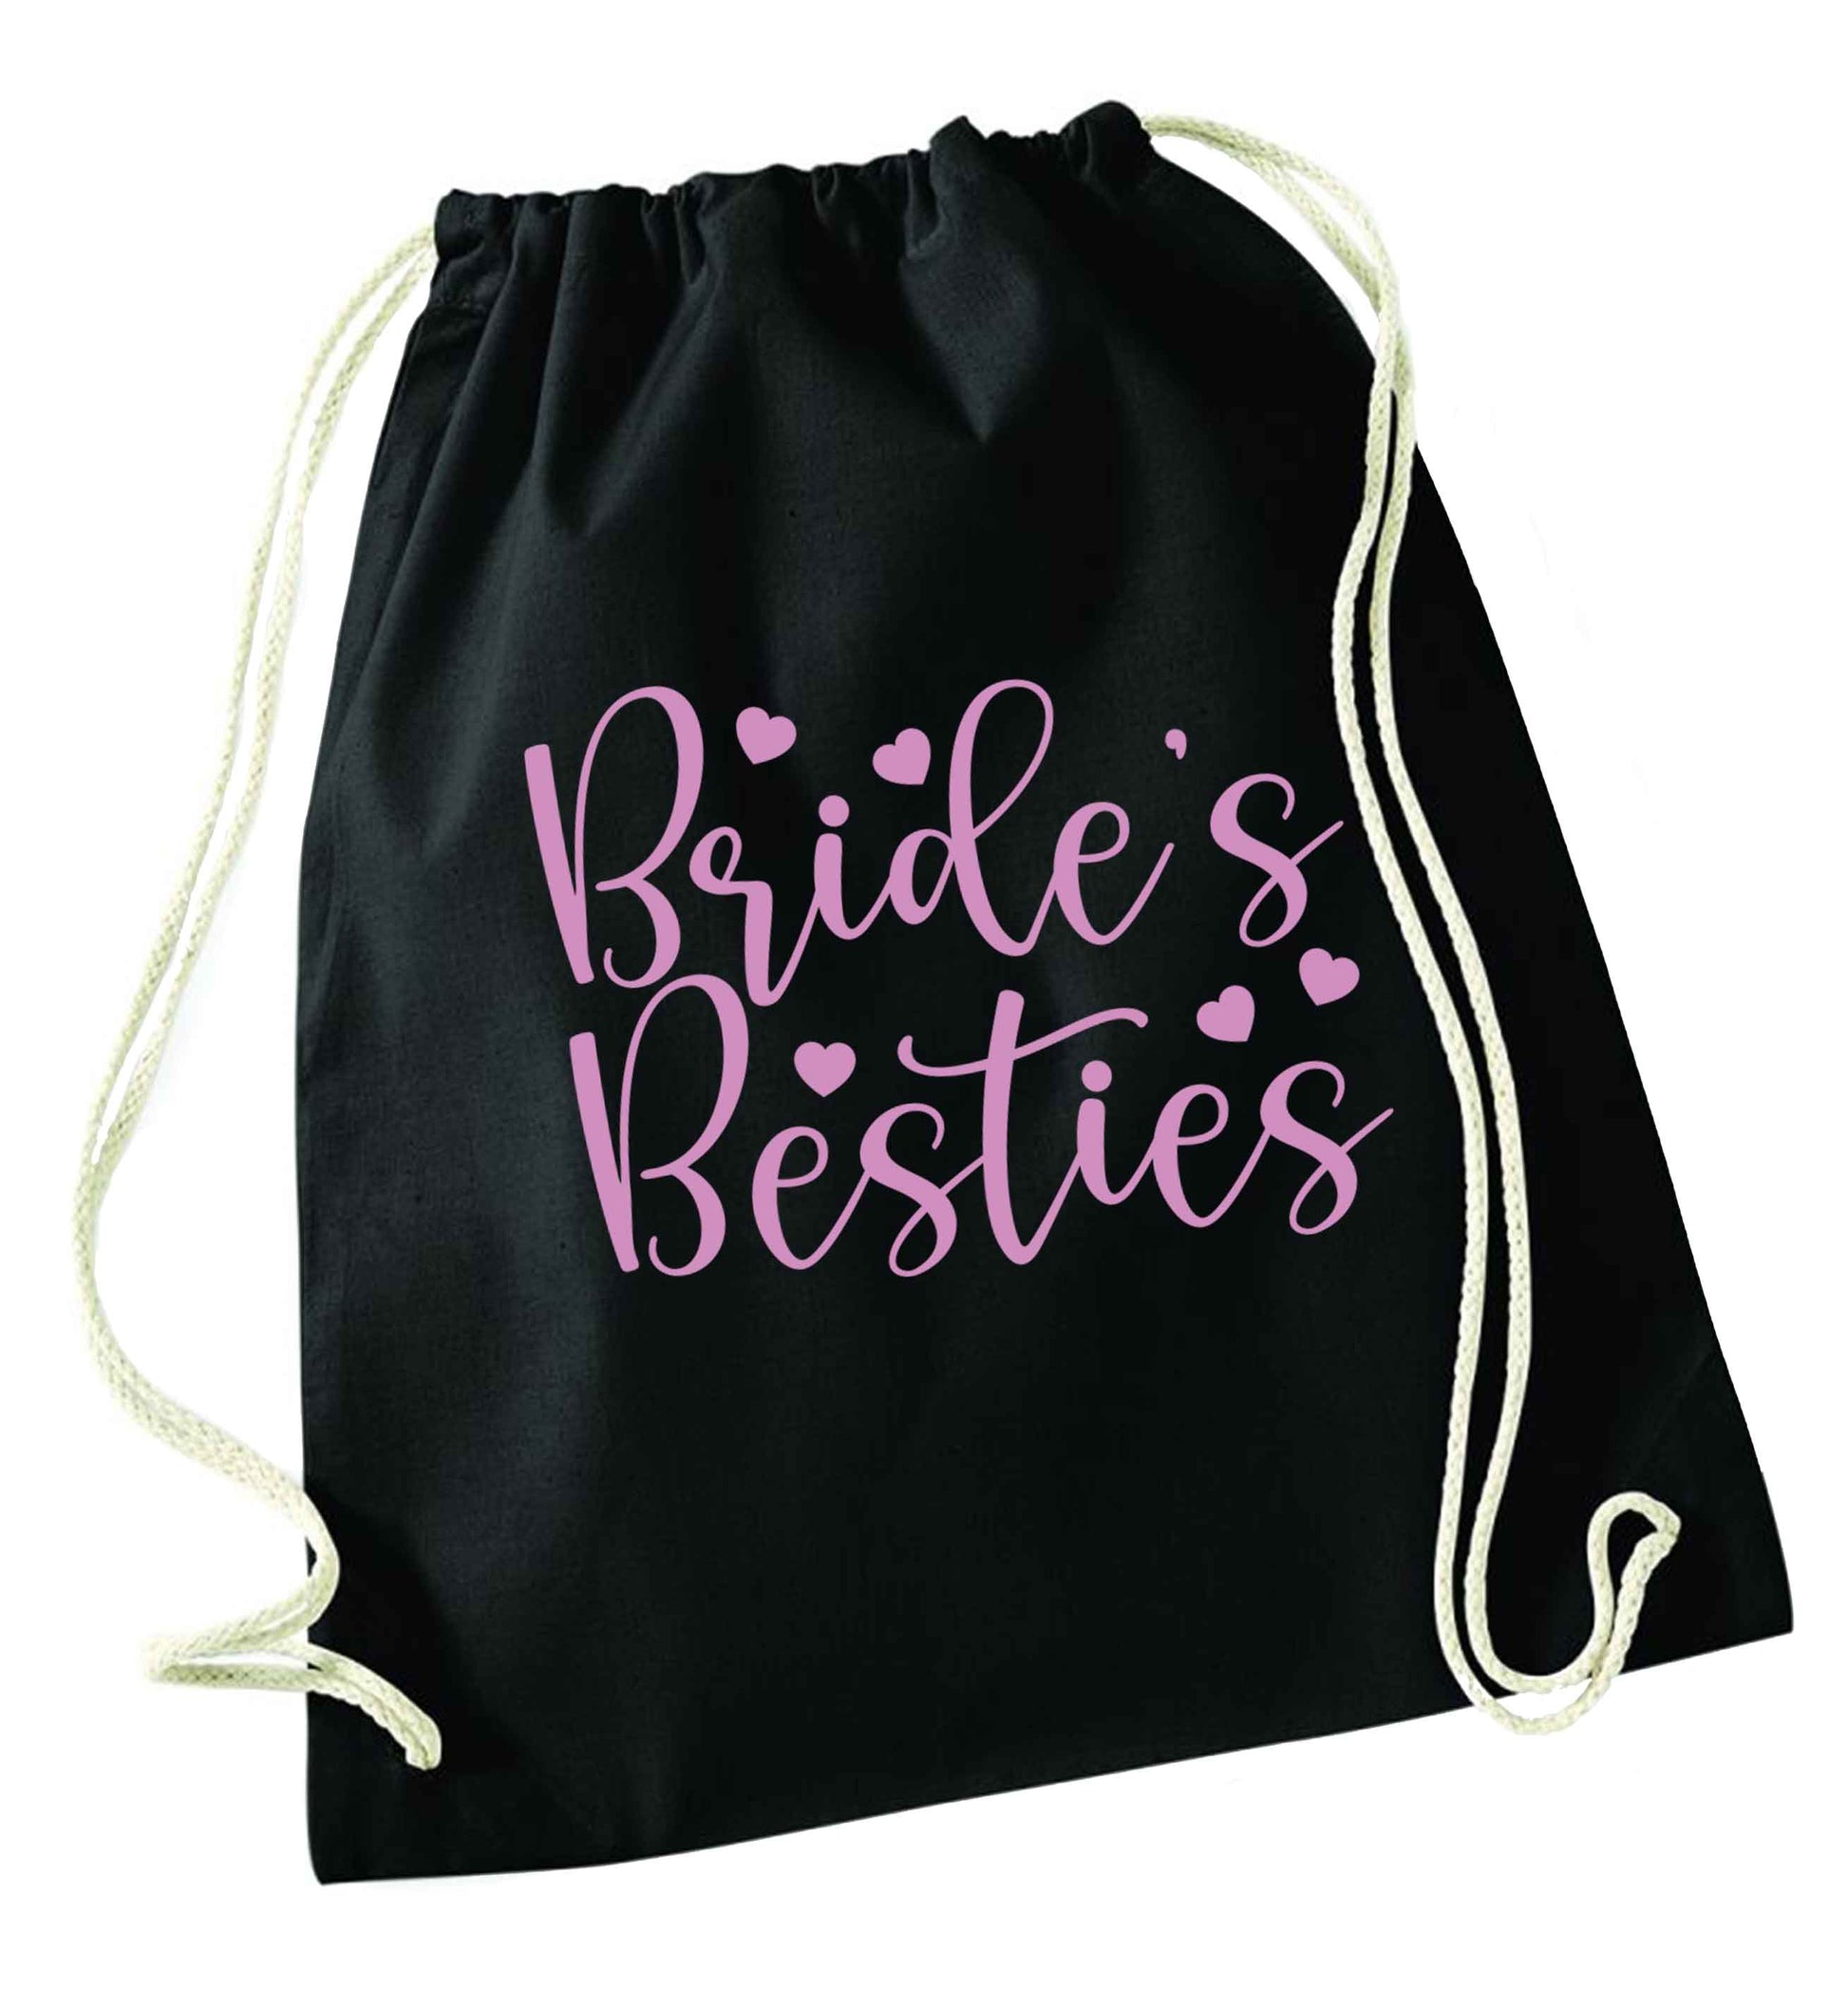 Brides besties black drawstring bag